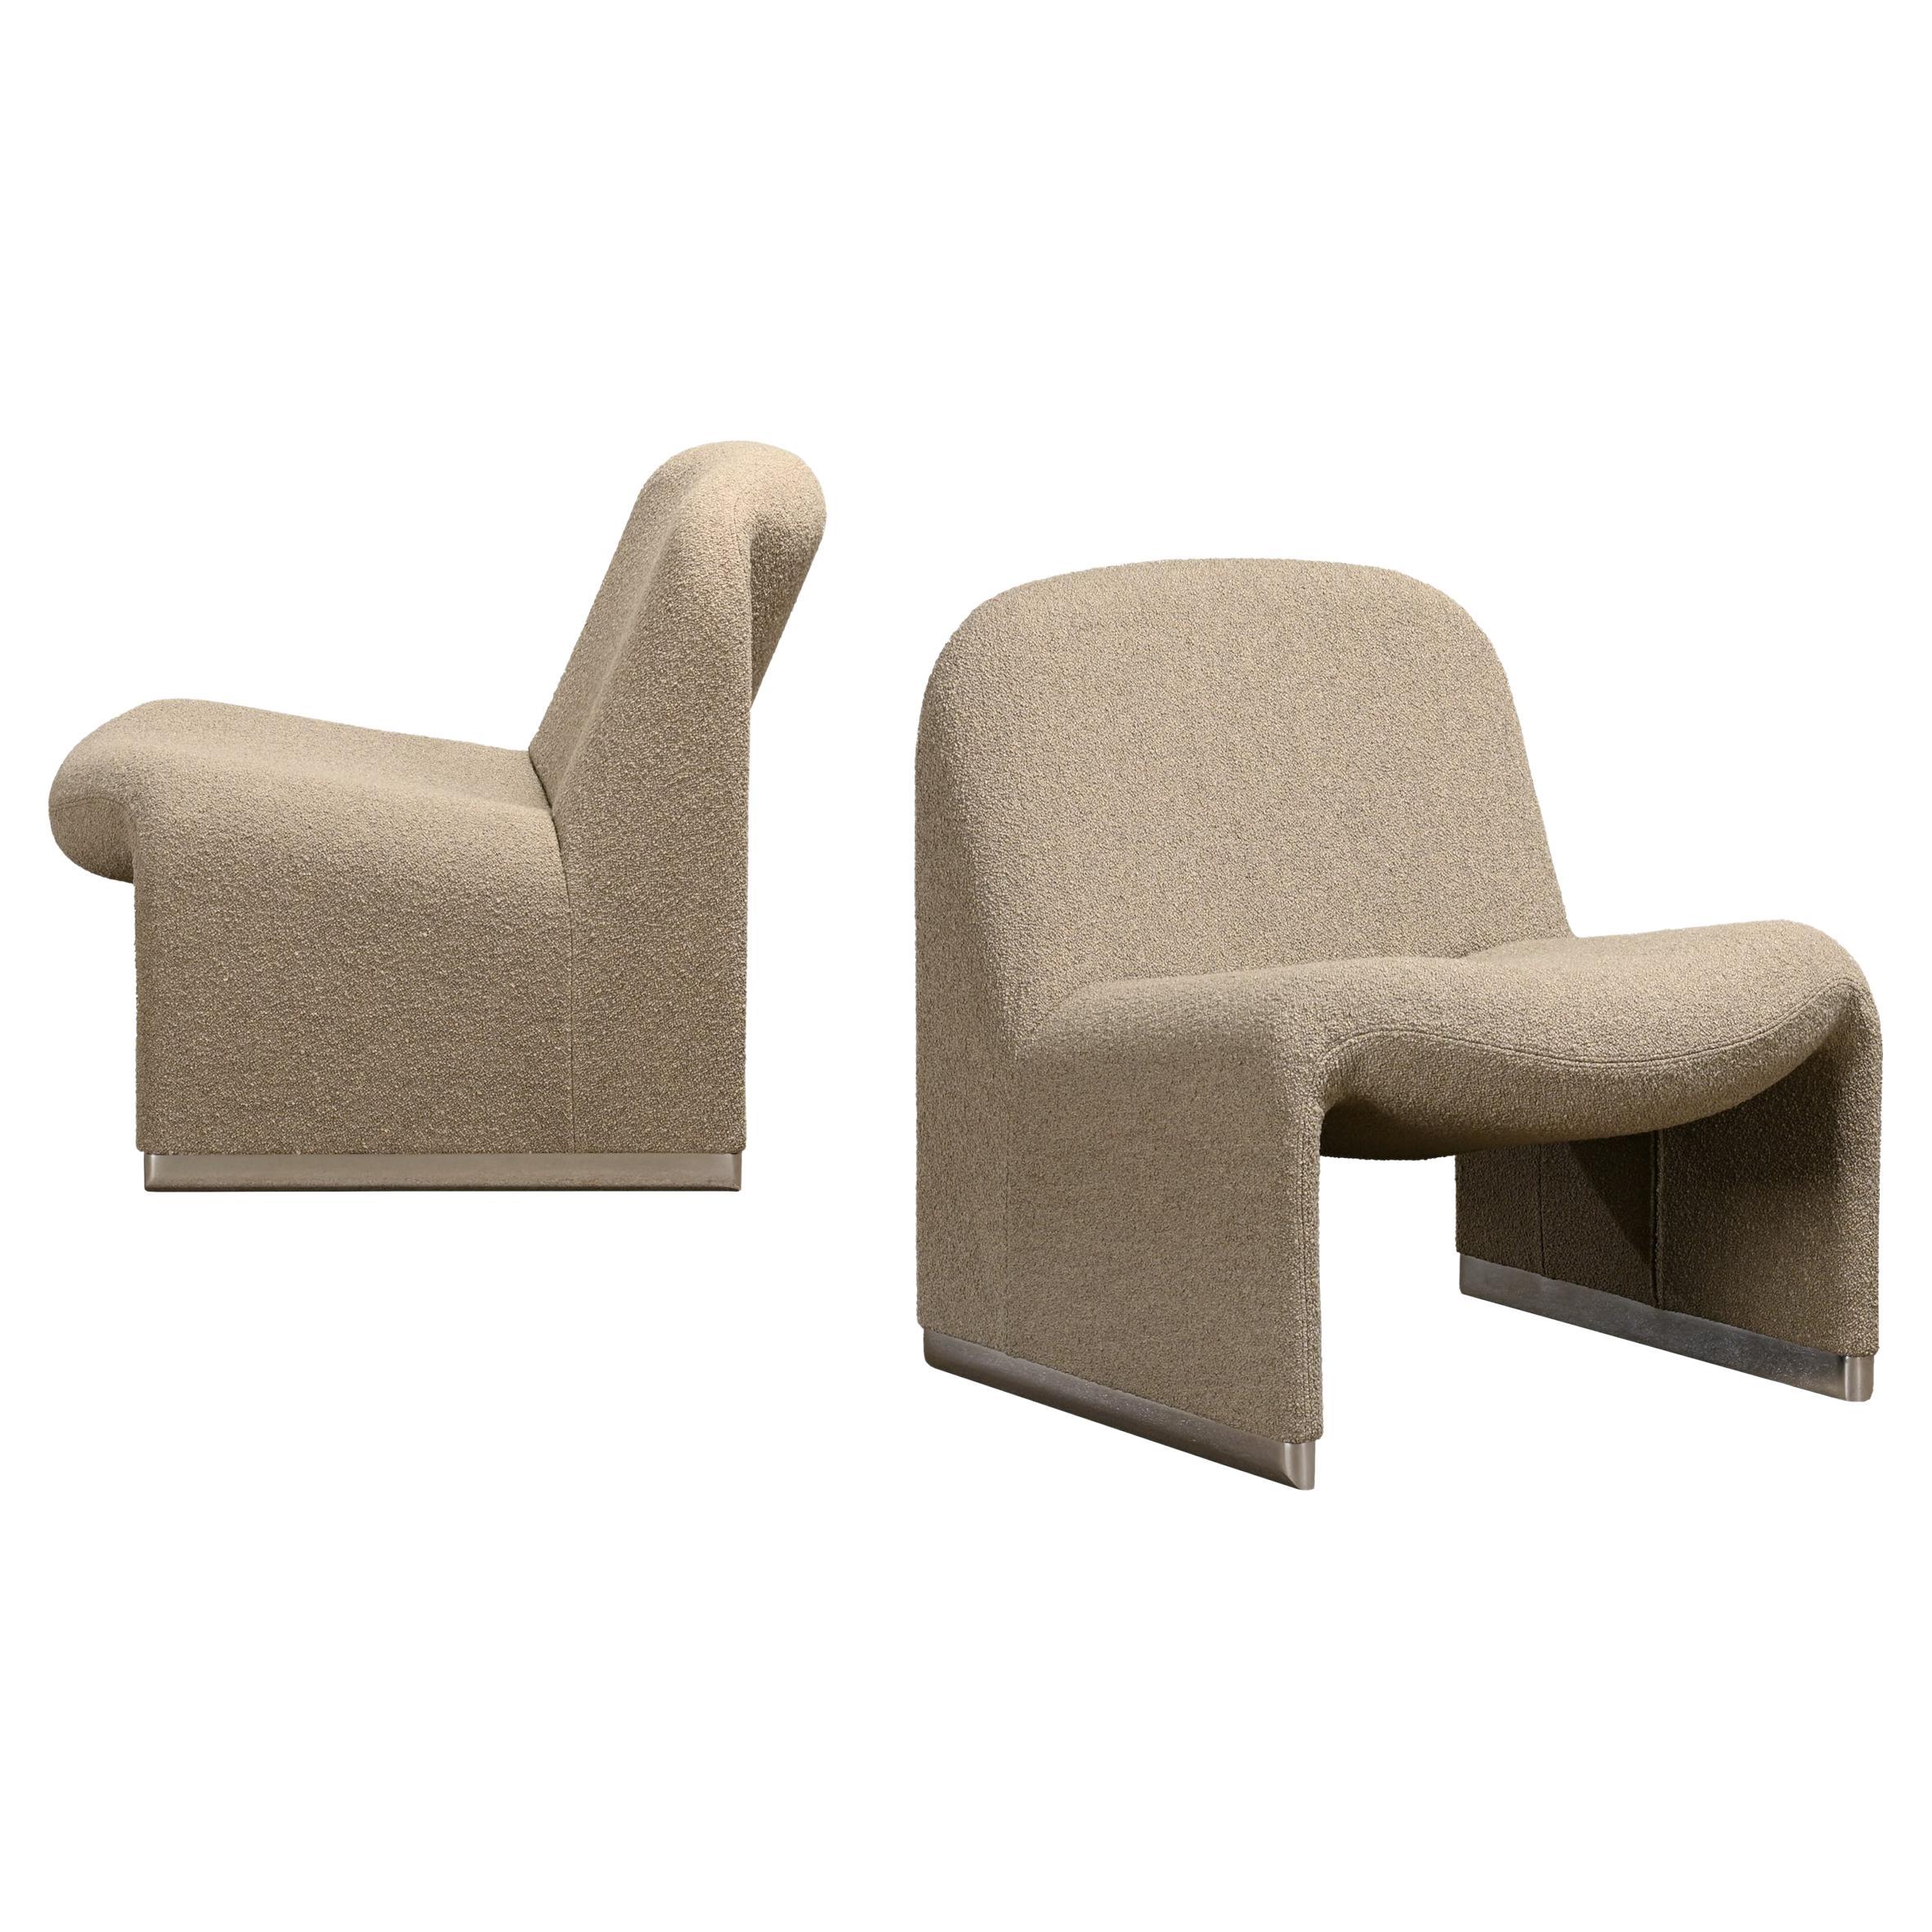 Giancarlo Piretti Alky Lounge Chair in Stone Grey Bouclé Wool, Anonima Castelli